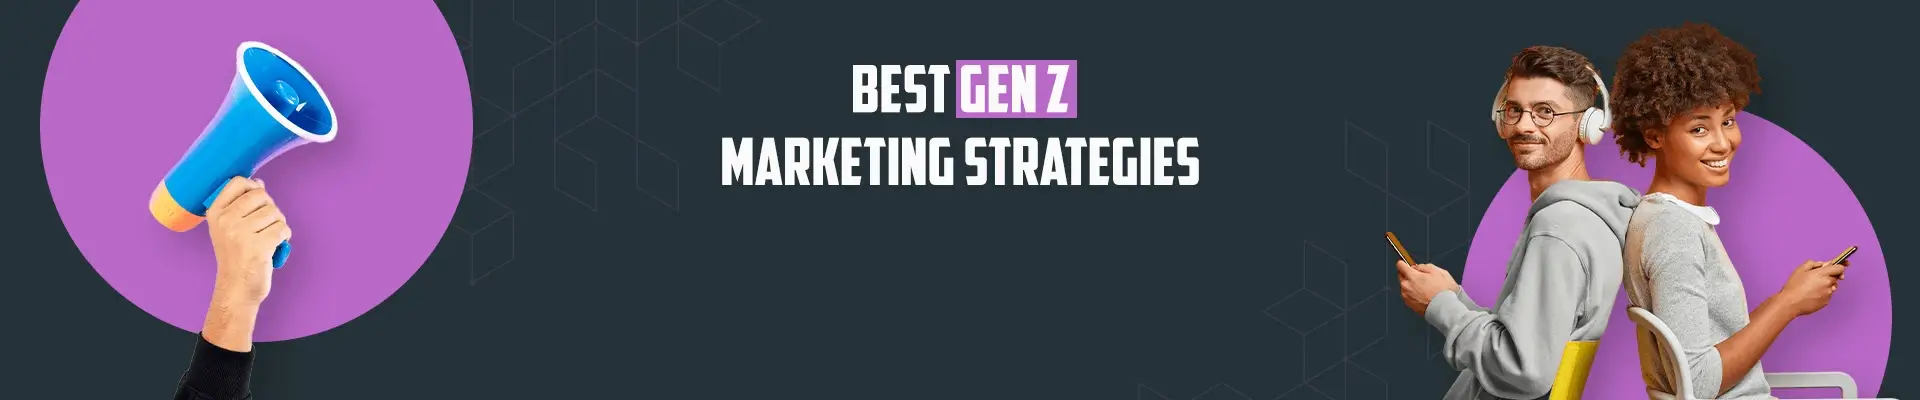 Marketing to Generation Z: Best Gen Z Marketing Strategies For Implement In 2022